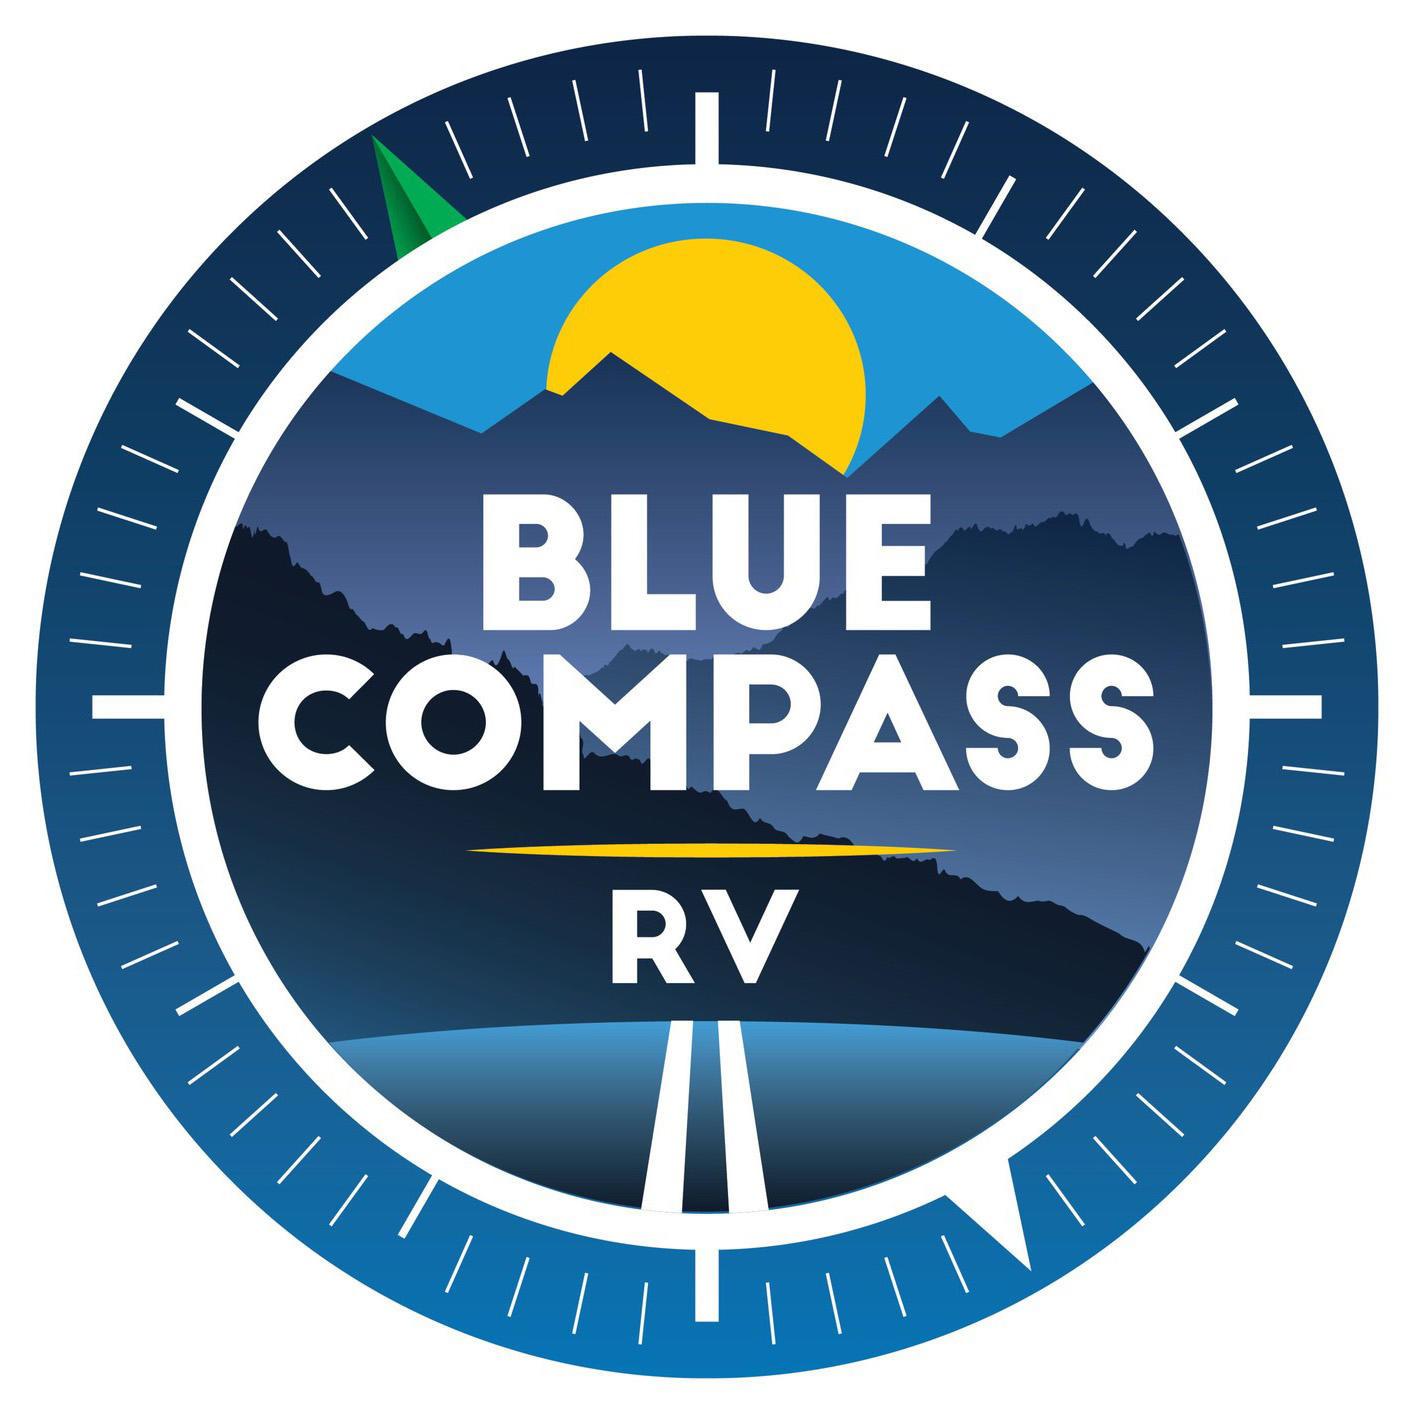 Blue Compass RV Bowling Green